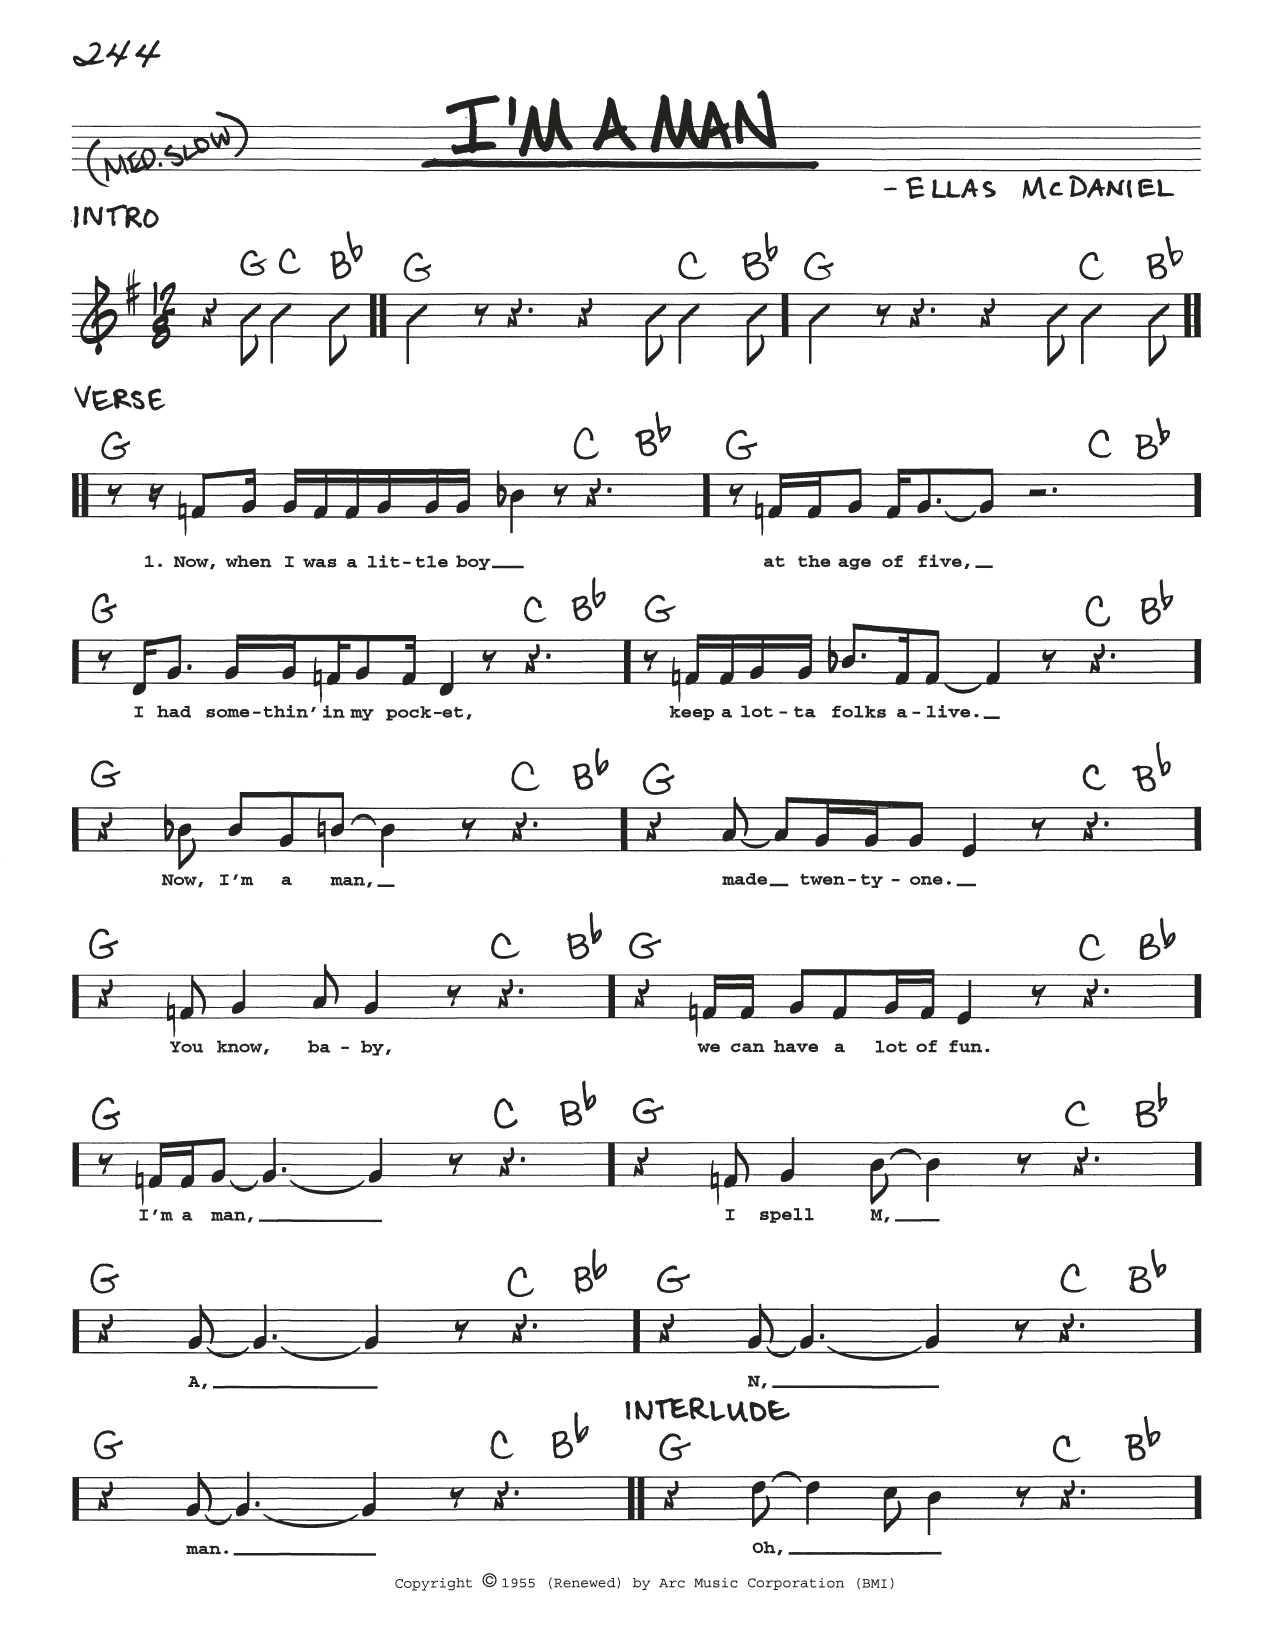 Ellas McDaniel I'm A Man Sheet Music Notes & Chords for Real Book – Melody, Lyrics & Chords - Download or Print PDF